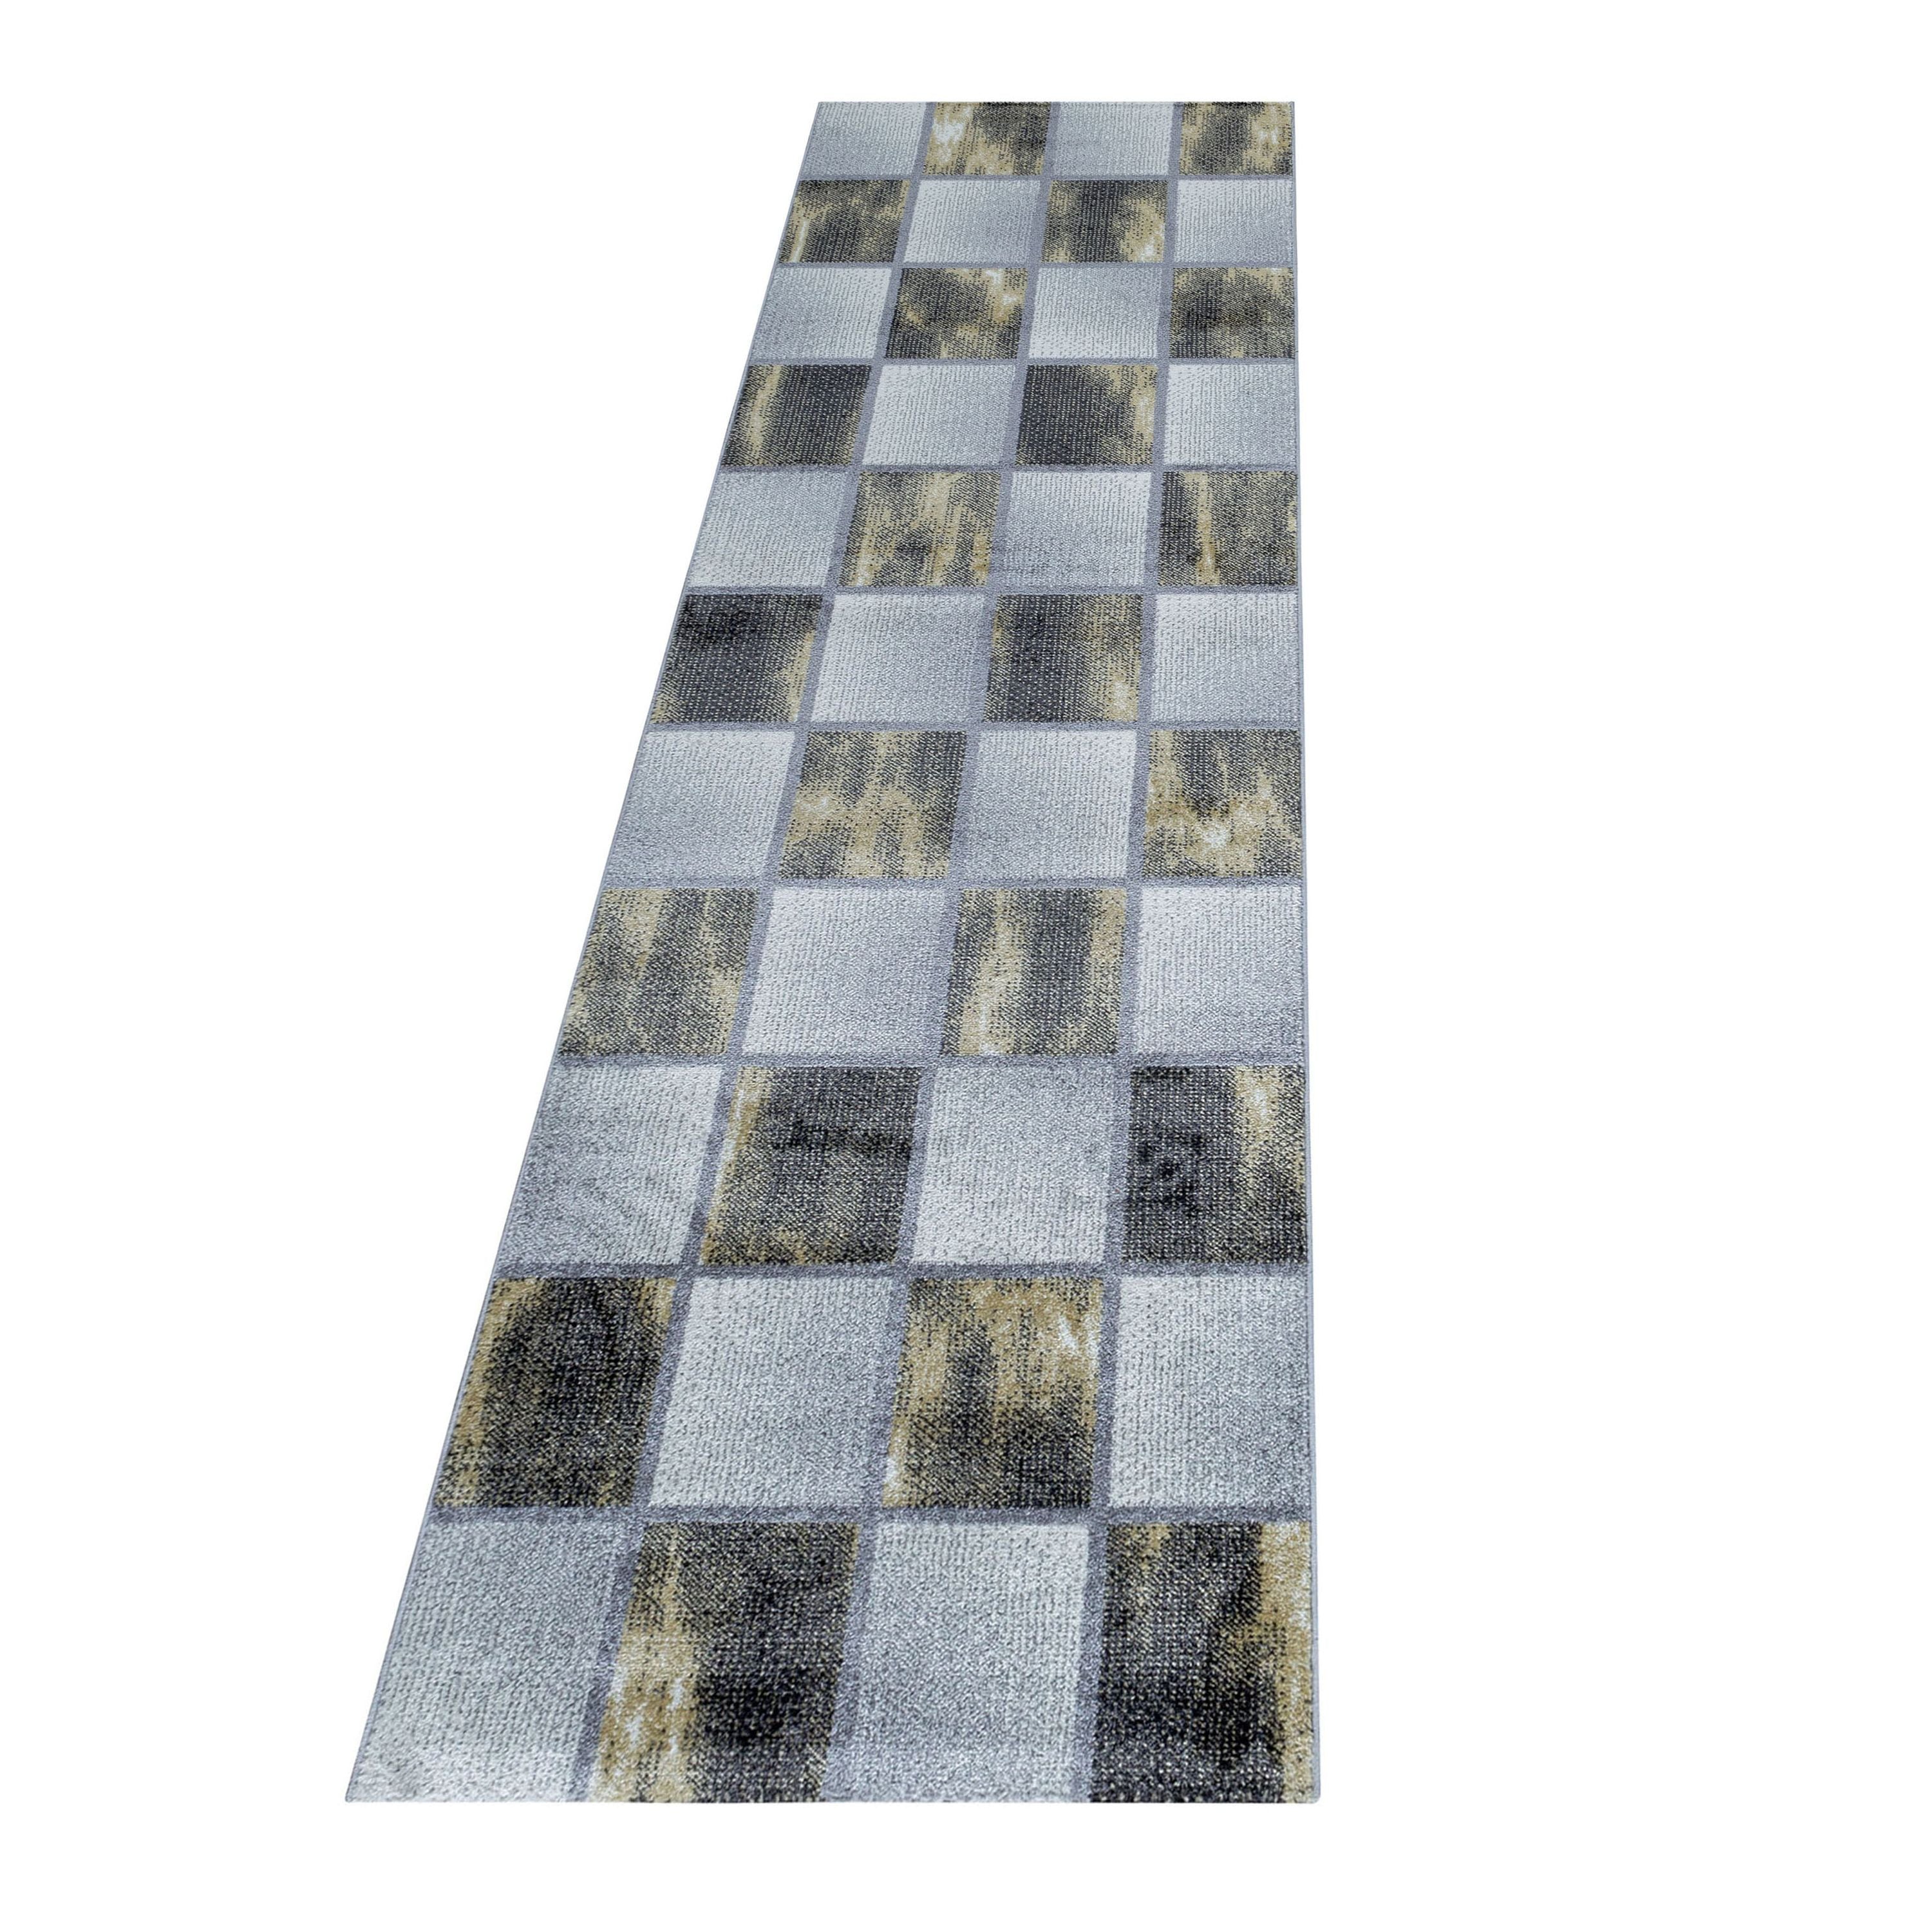 Kurzflor Teppich Bettset Gelb Grau Quadrat Muster Marmoriert 3 Teile Läufer Set